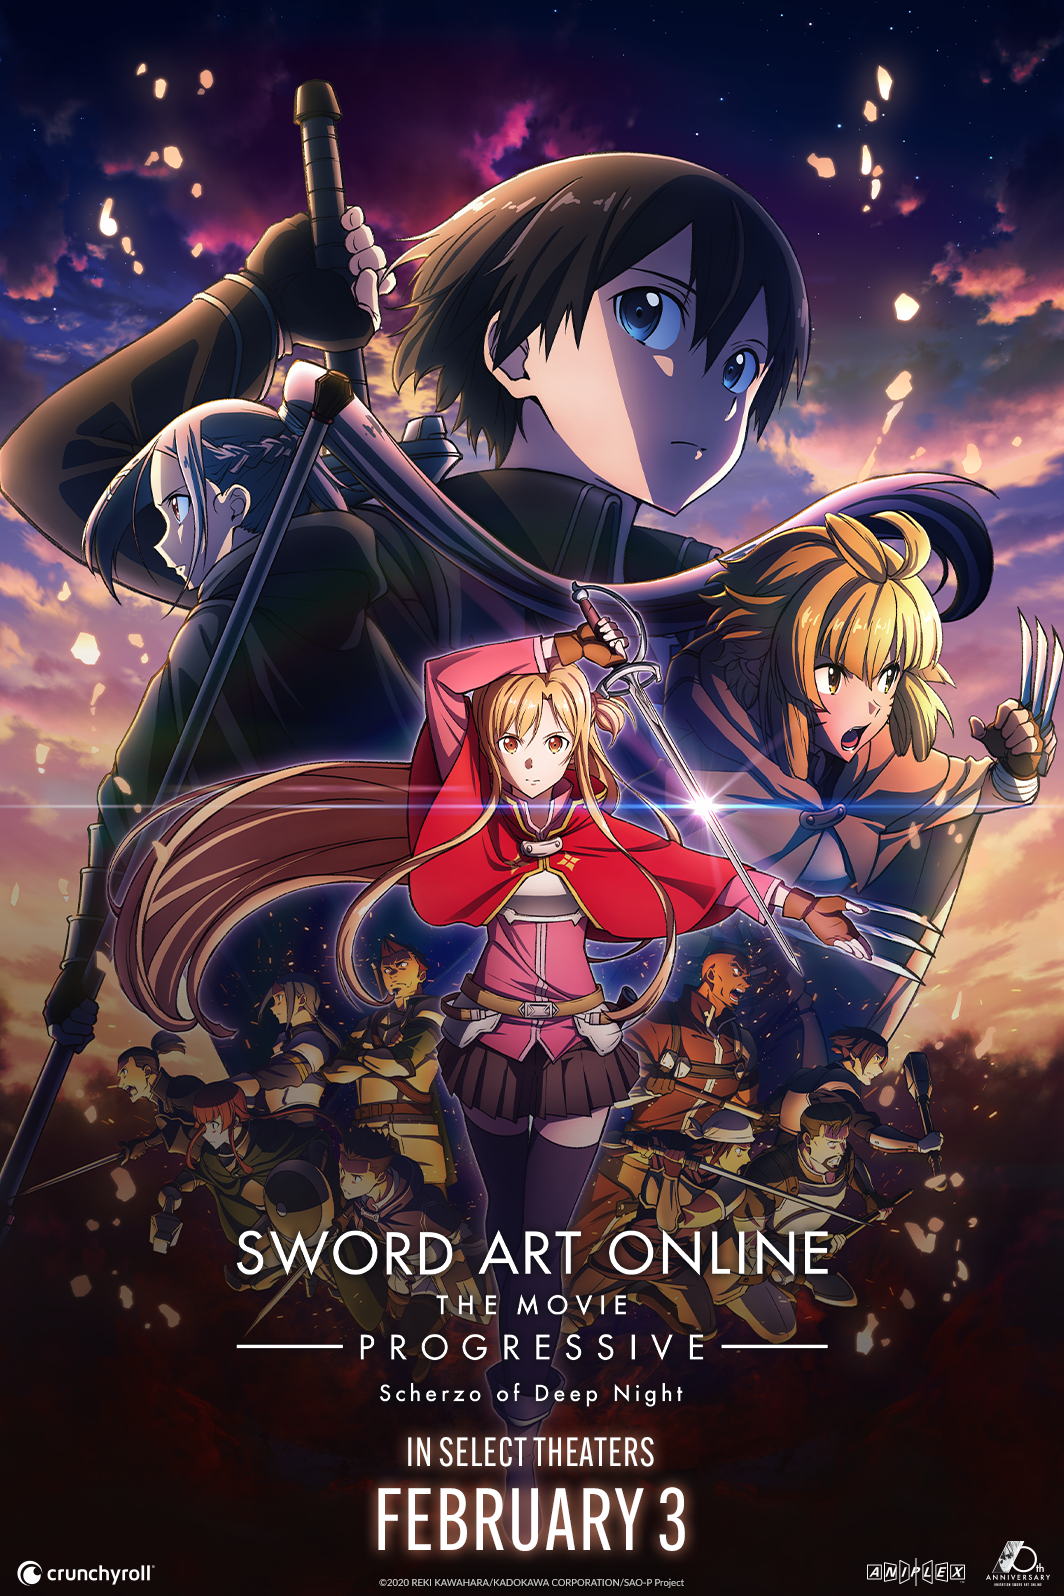 Sword Art Online Progressive Film New Trailer Revealed - Siliconera